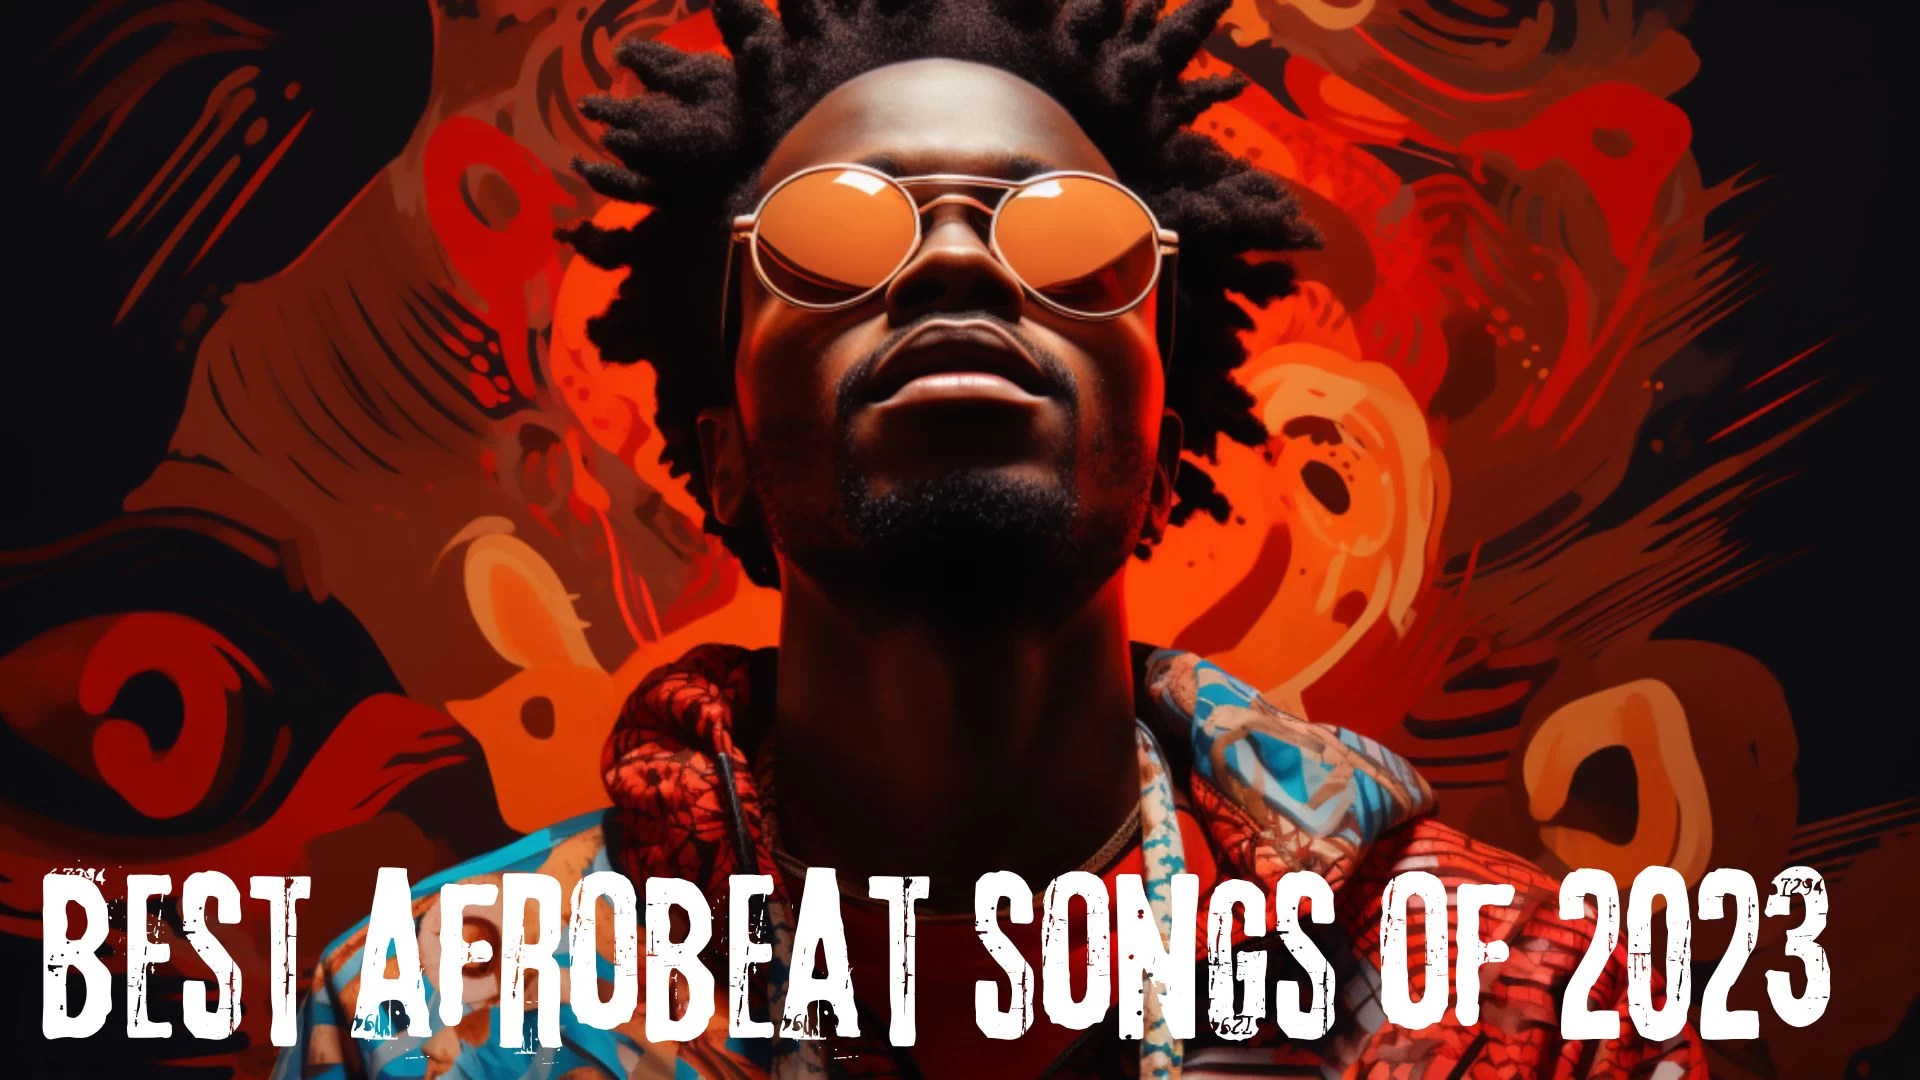 Best Afrobeat Songs of 2023 - Top 10 Grooves